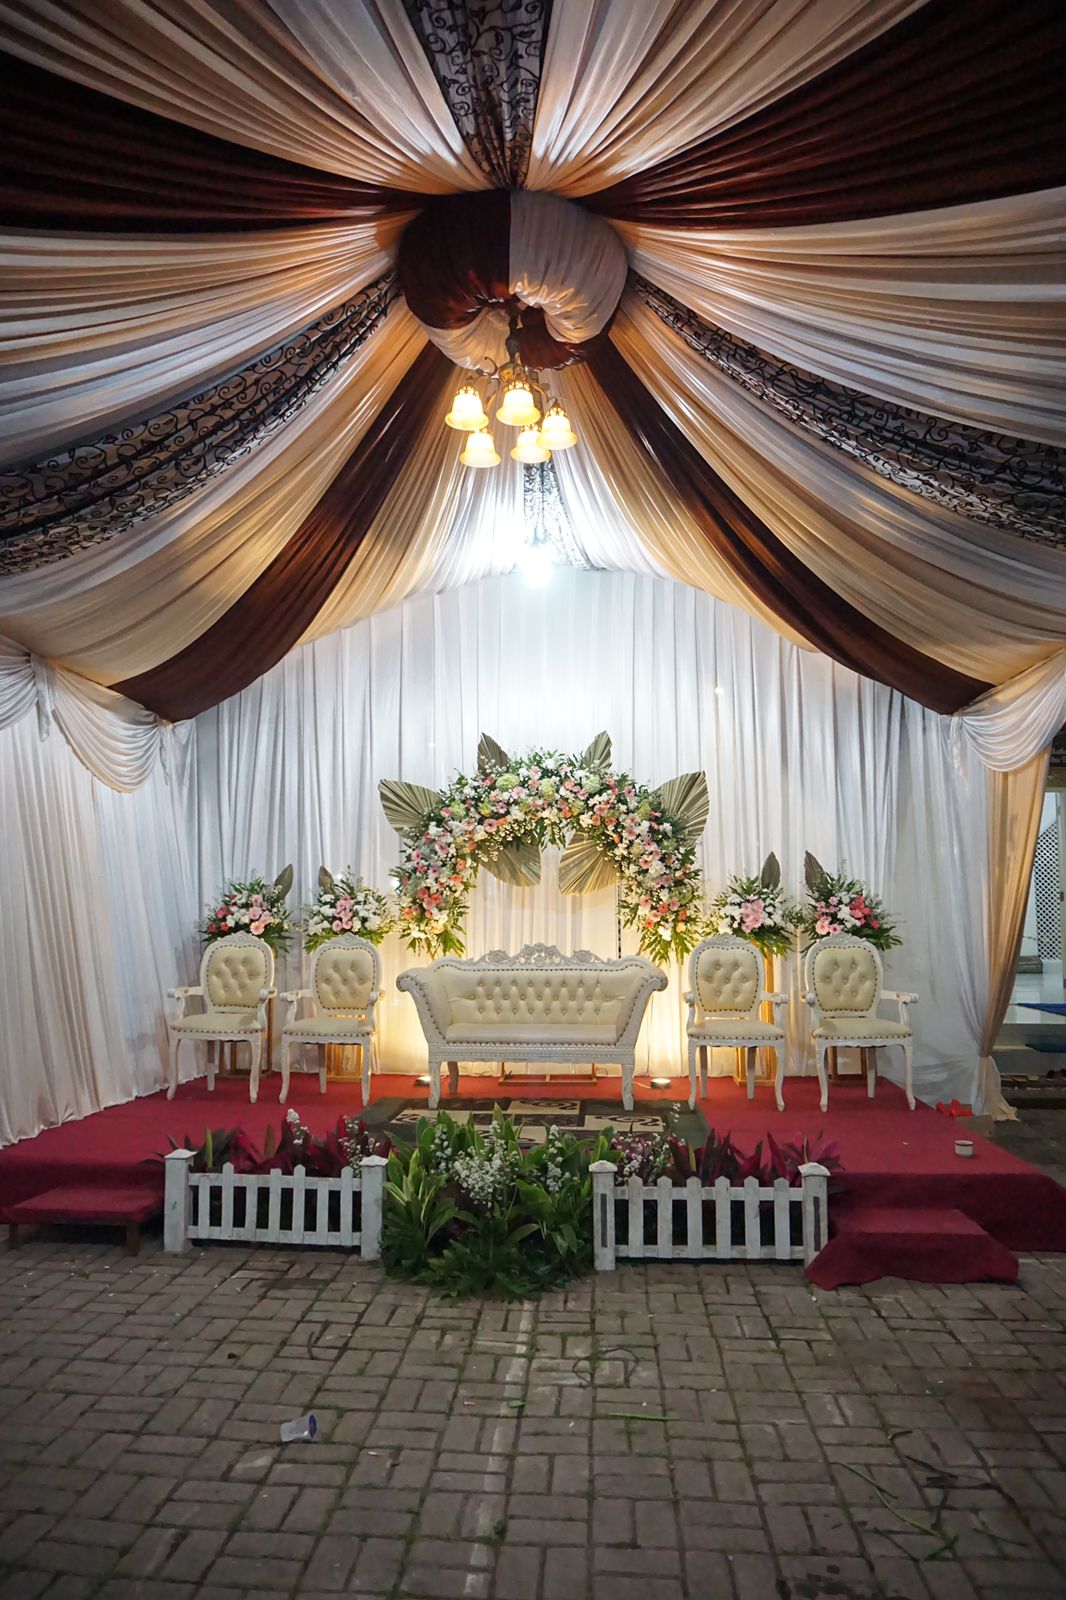 PAKET WEDDING PALING MURAH KRAMAT PELA MELAWAI JAKARTA